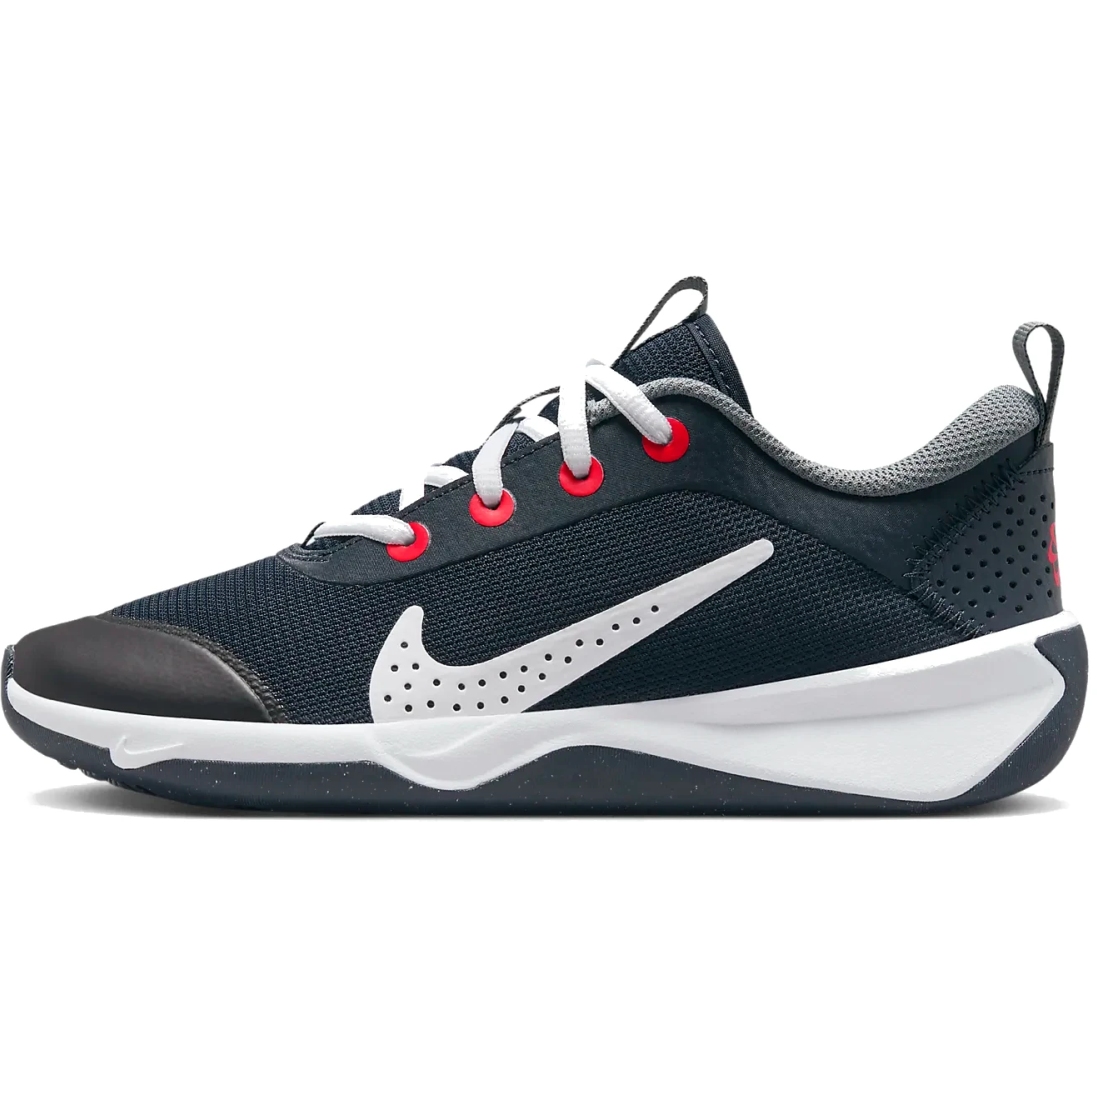 Productfoto van Nike Omni Multi-Court Indoorschoenen Kinderen - dark obsidian/smoke grey/bright crimson/white DM9027-402